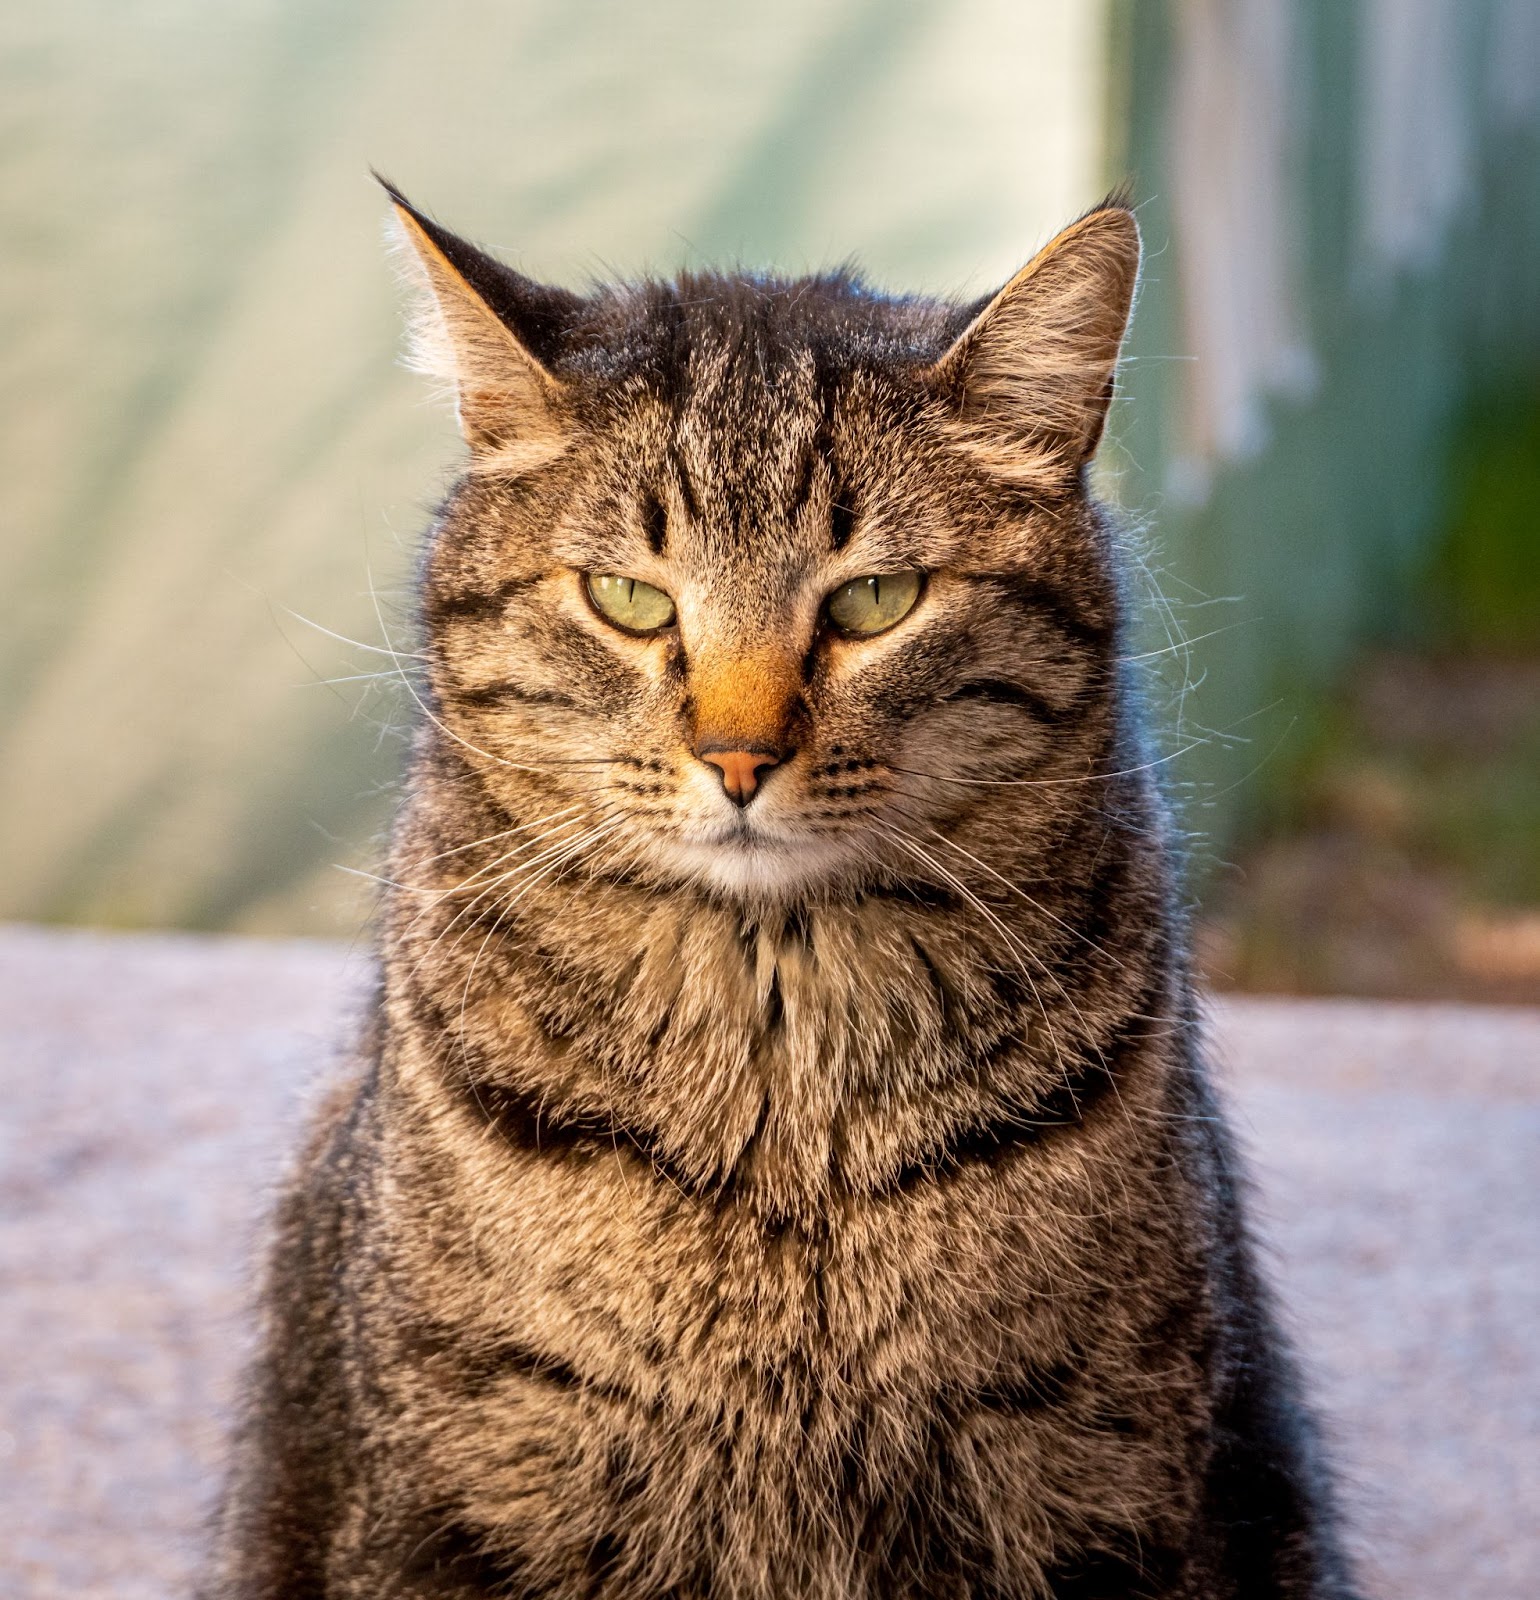 Image of a Manx cat 